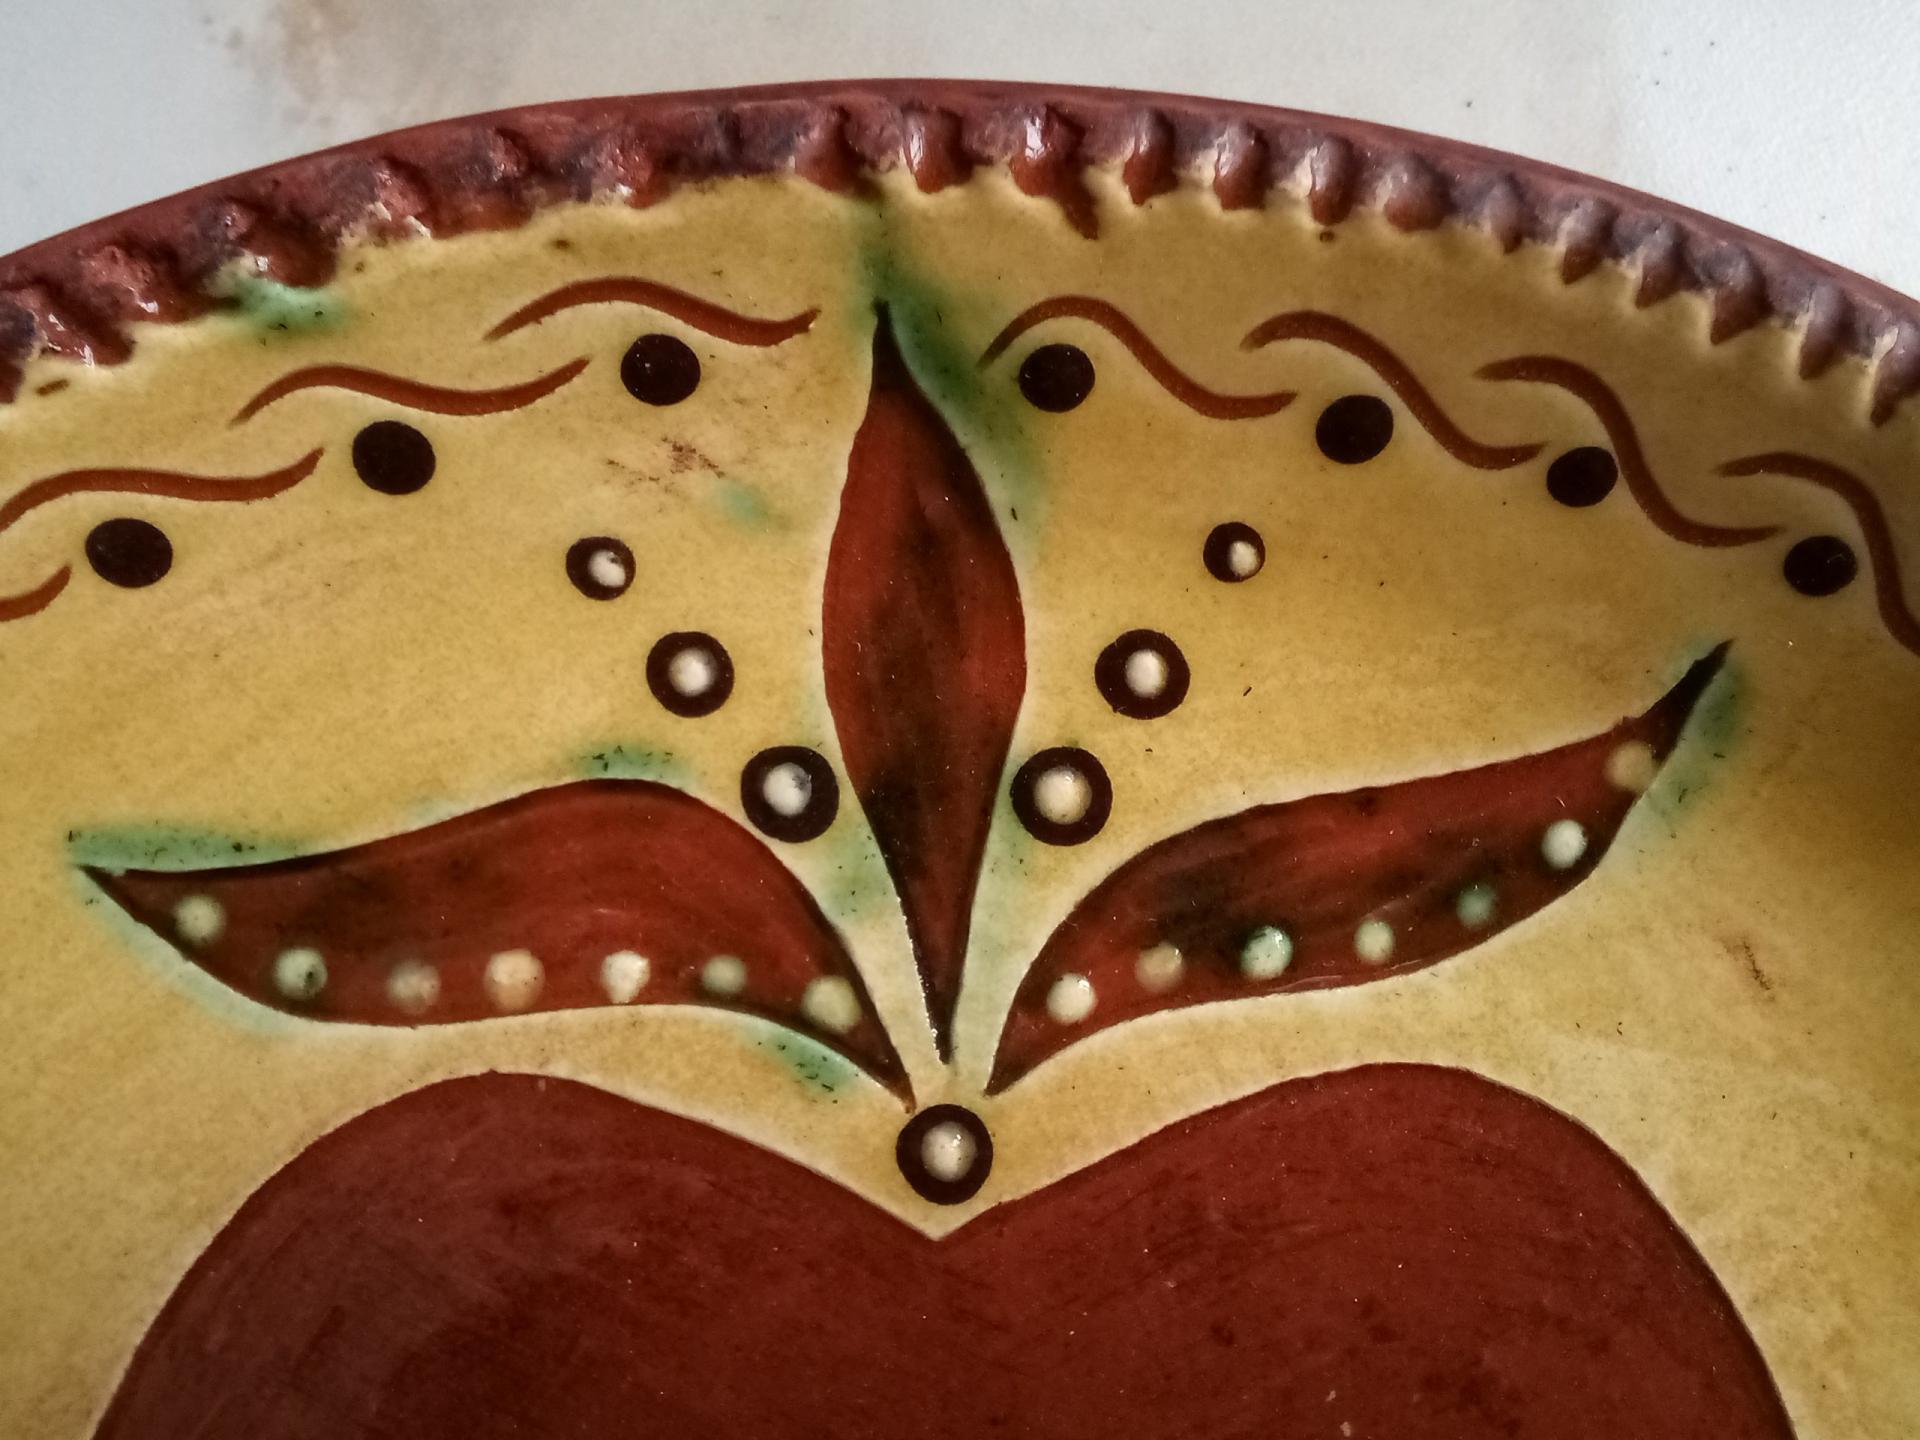 Custom Order Kulina Folk Art Redware 11 in. Plate, Heart, Tulips and Leaves